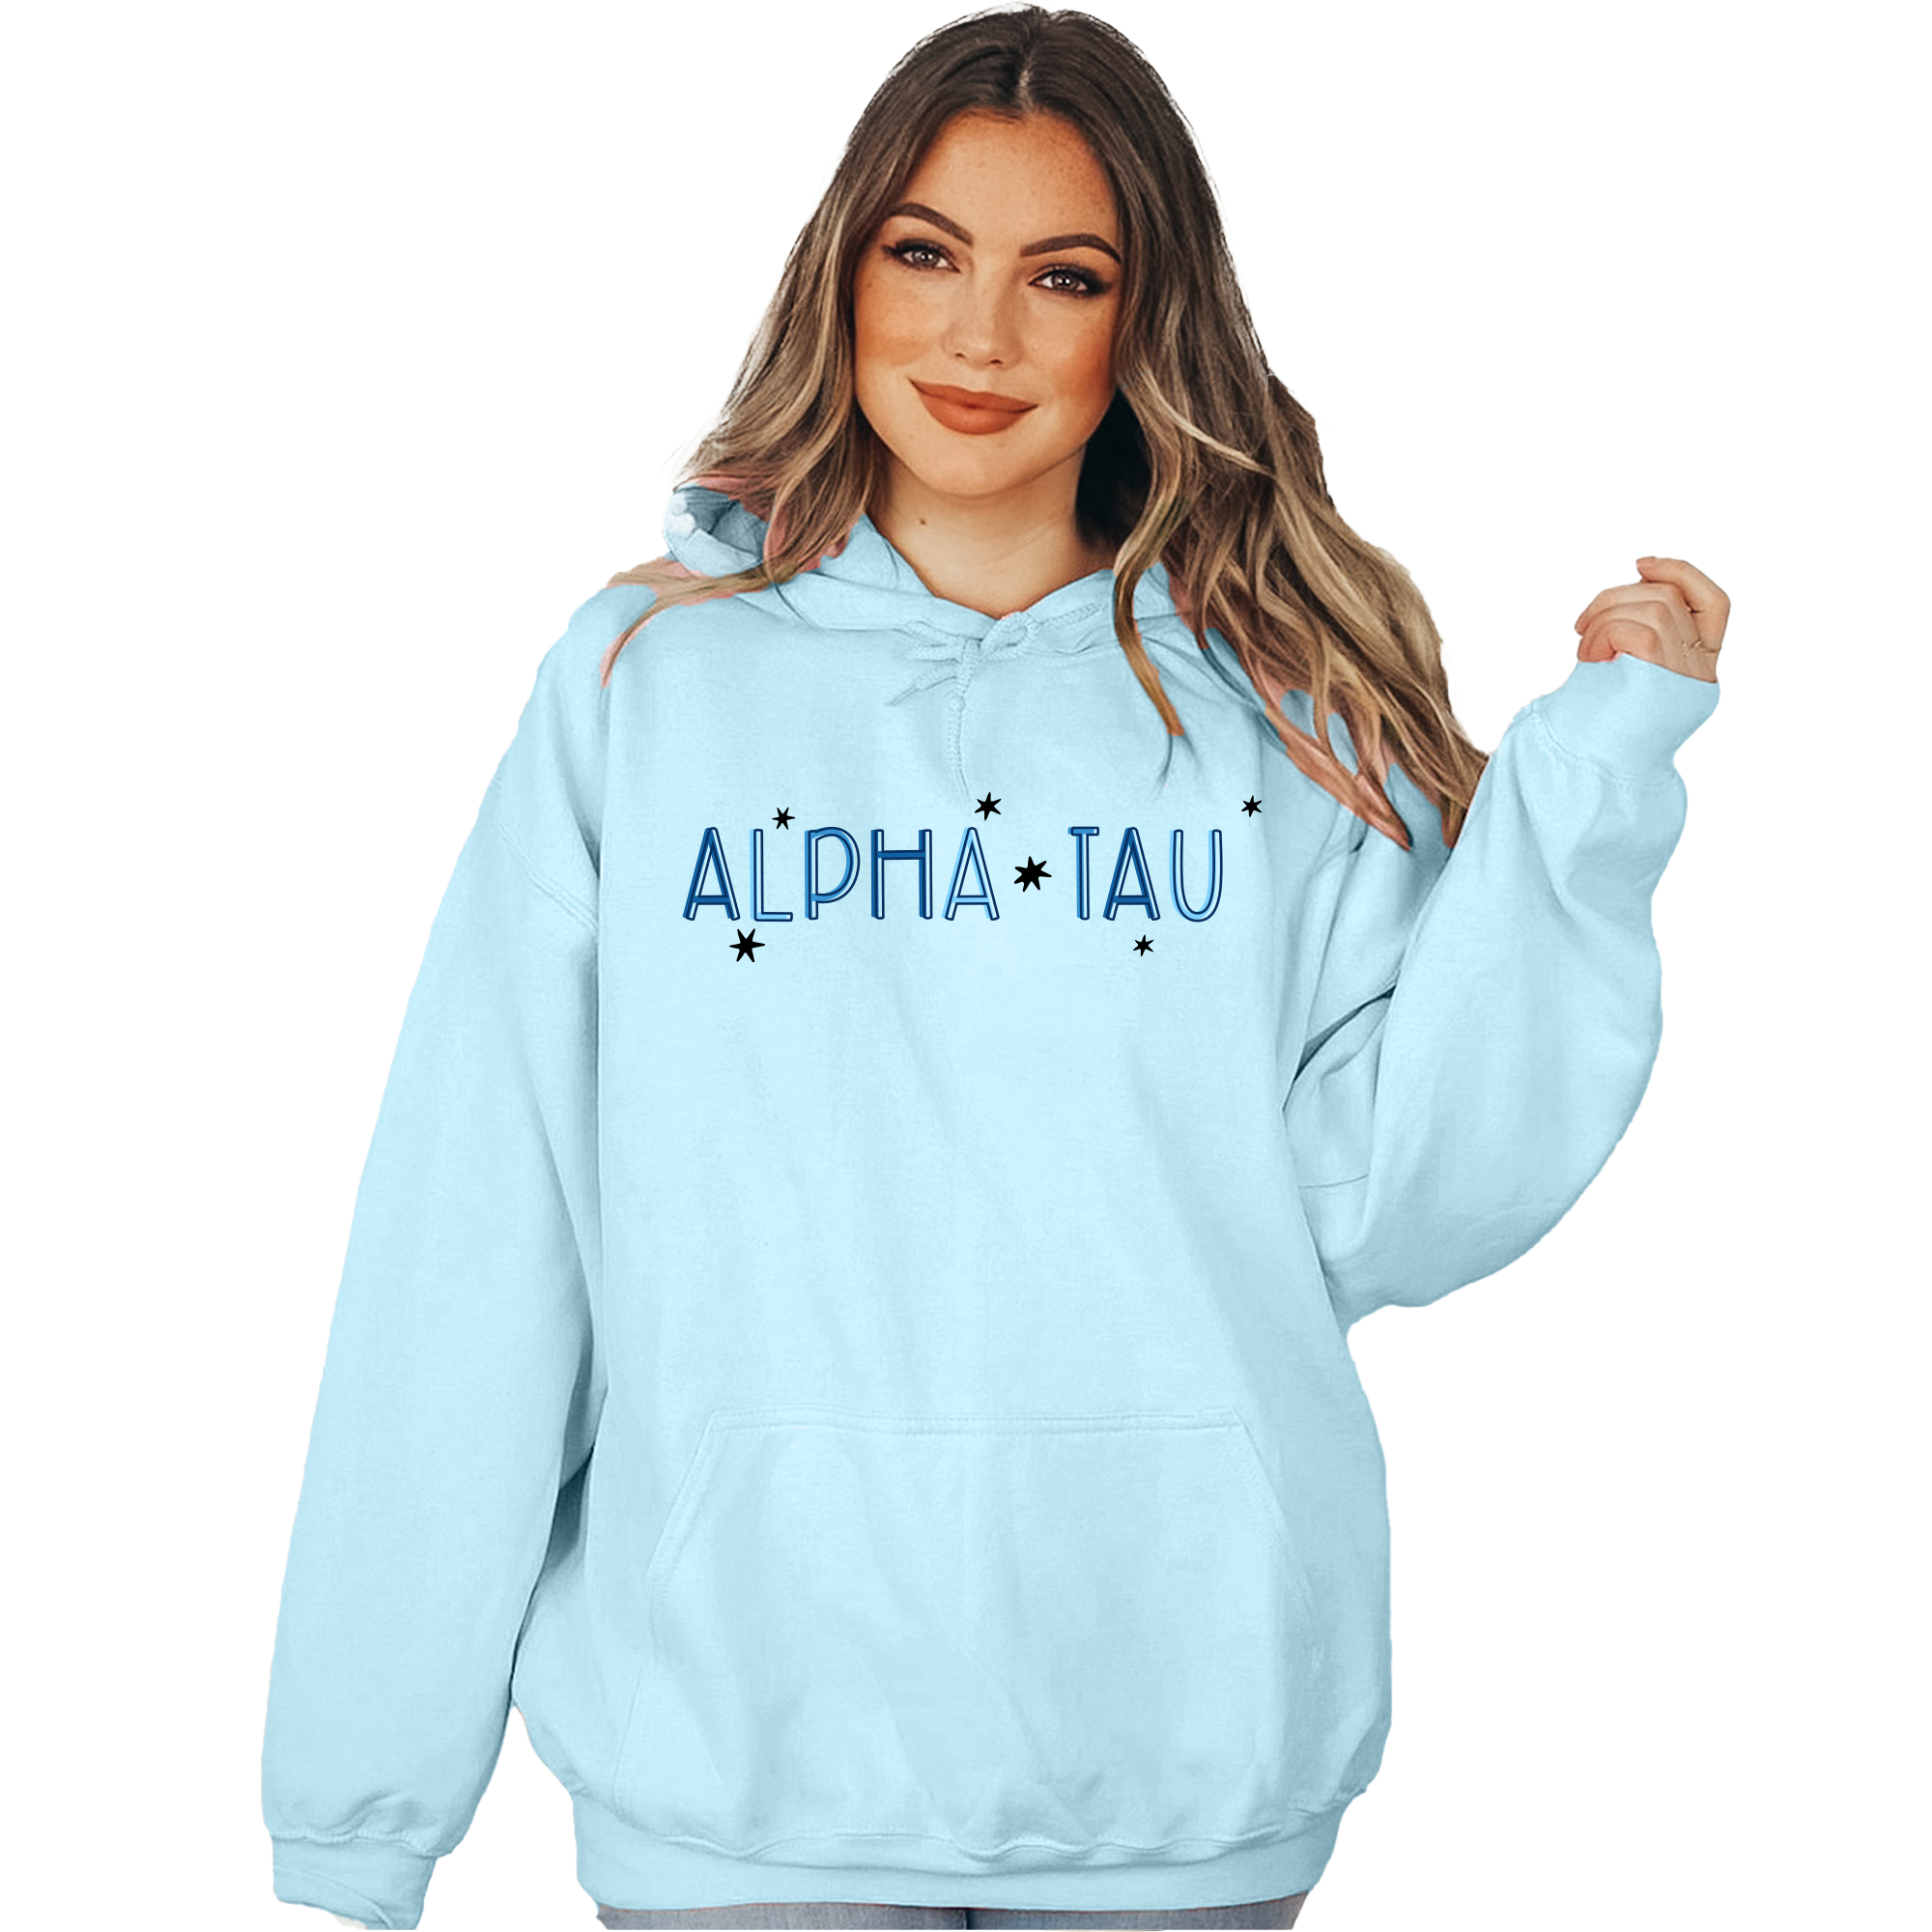 Alpha Sigma Tau Hoodie - Sparkle, Blue Hoodie, Greek Apparel, Big Little Reveal, Initiation - Go Greek Chic